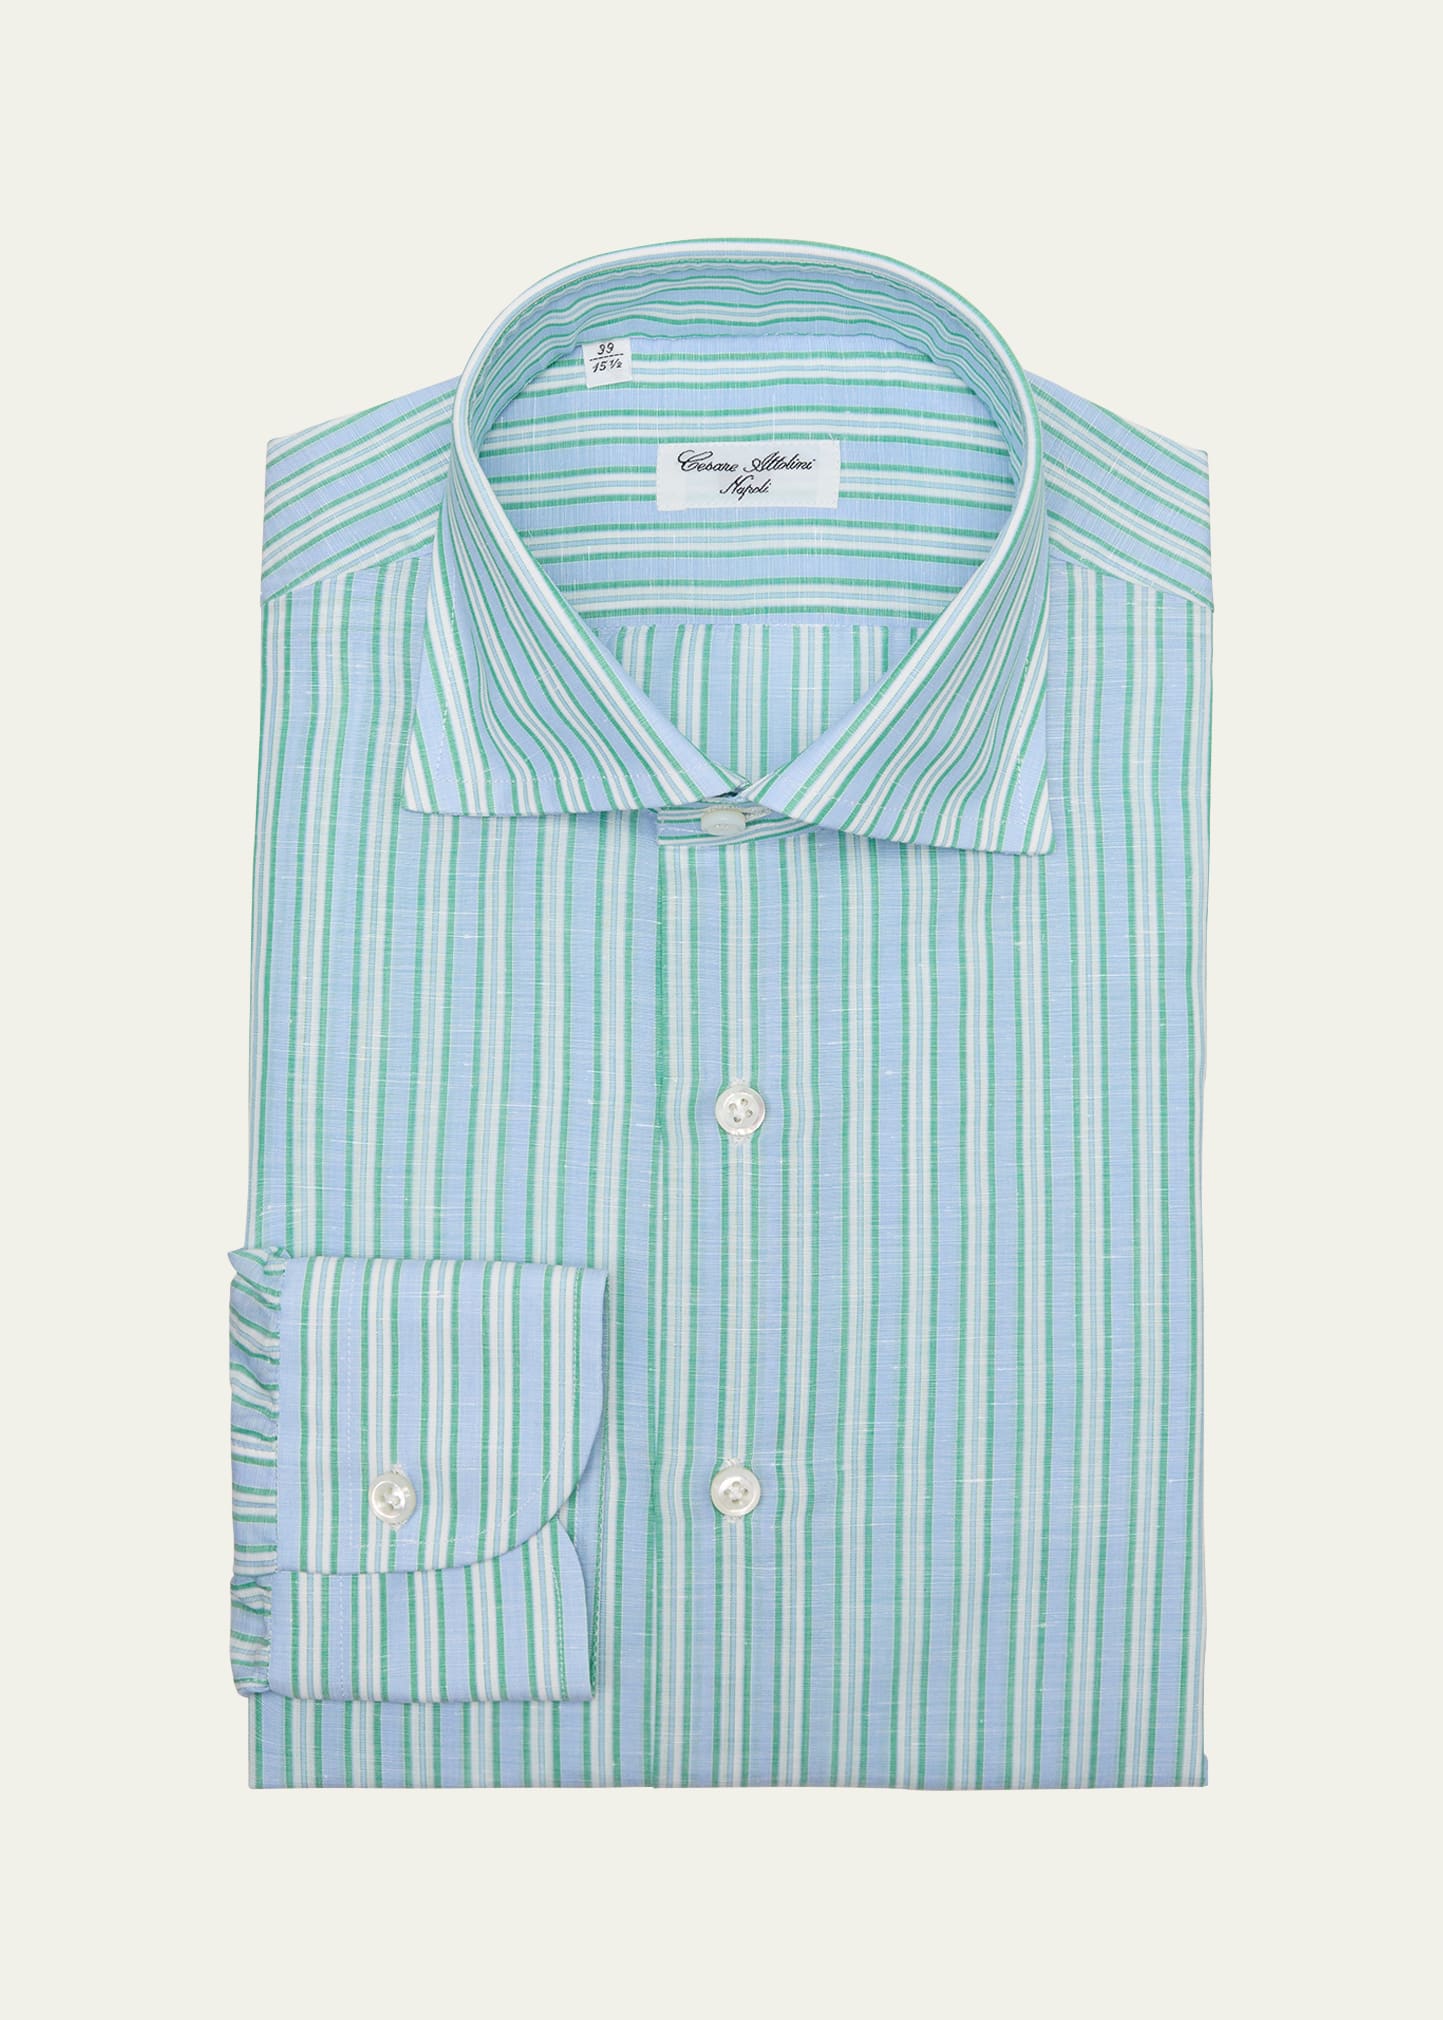 Men's Linen-Cotton Stripe Dress Shirt